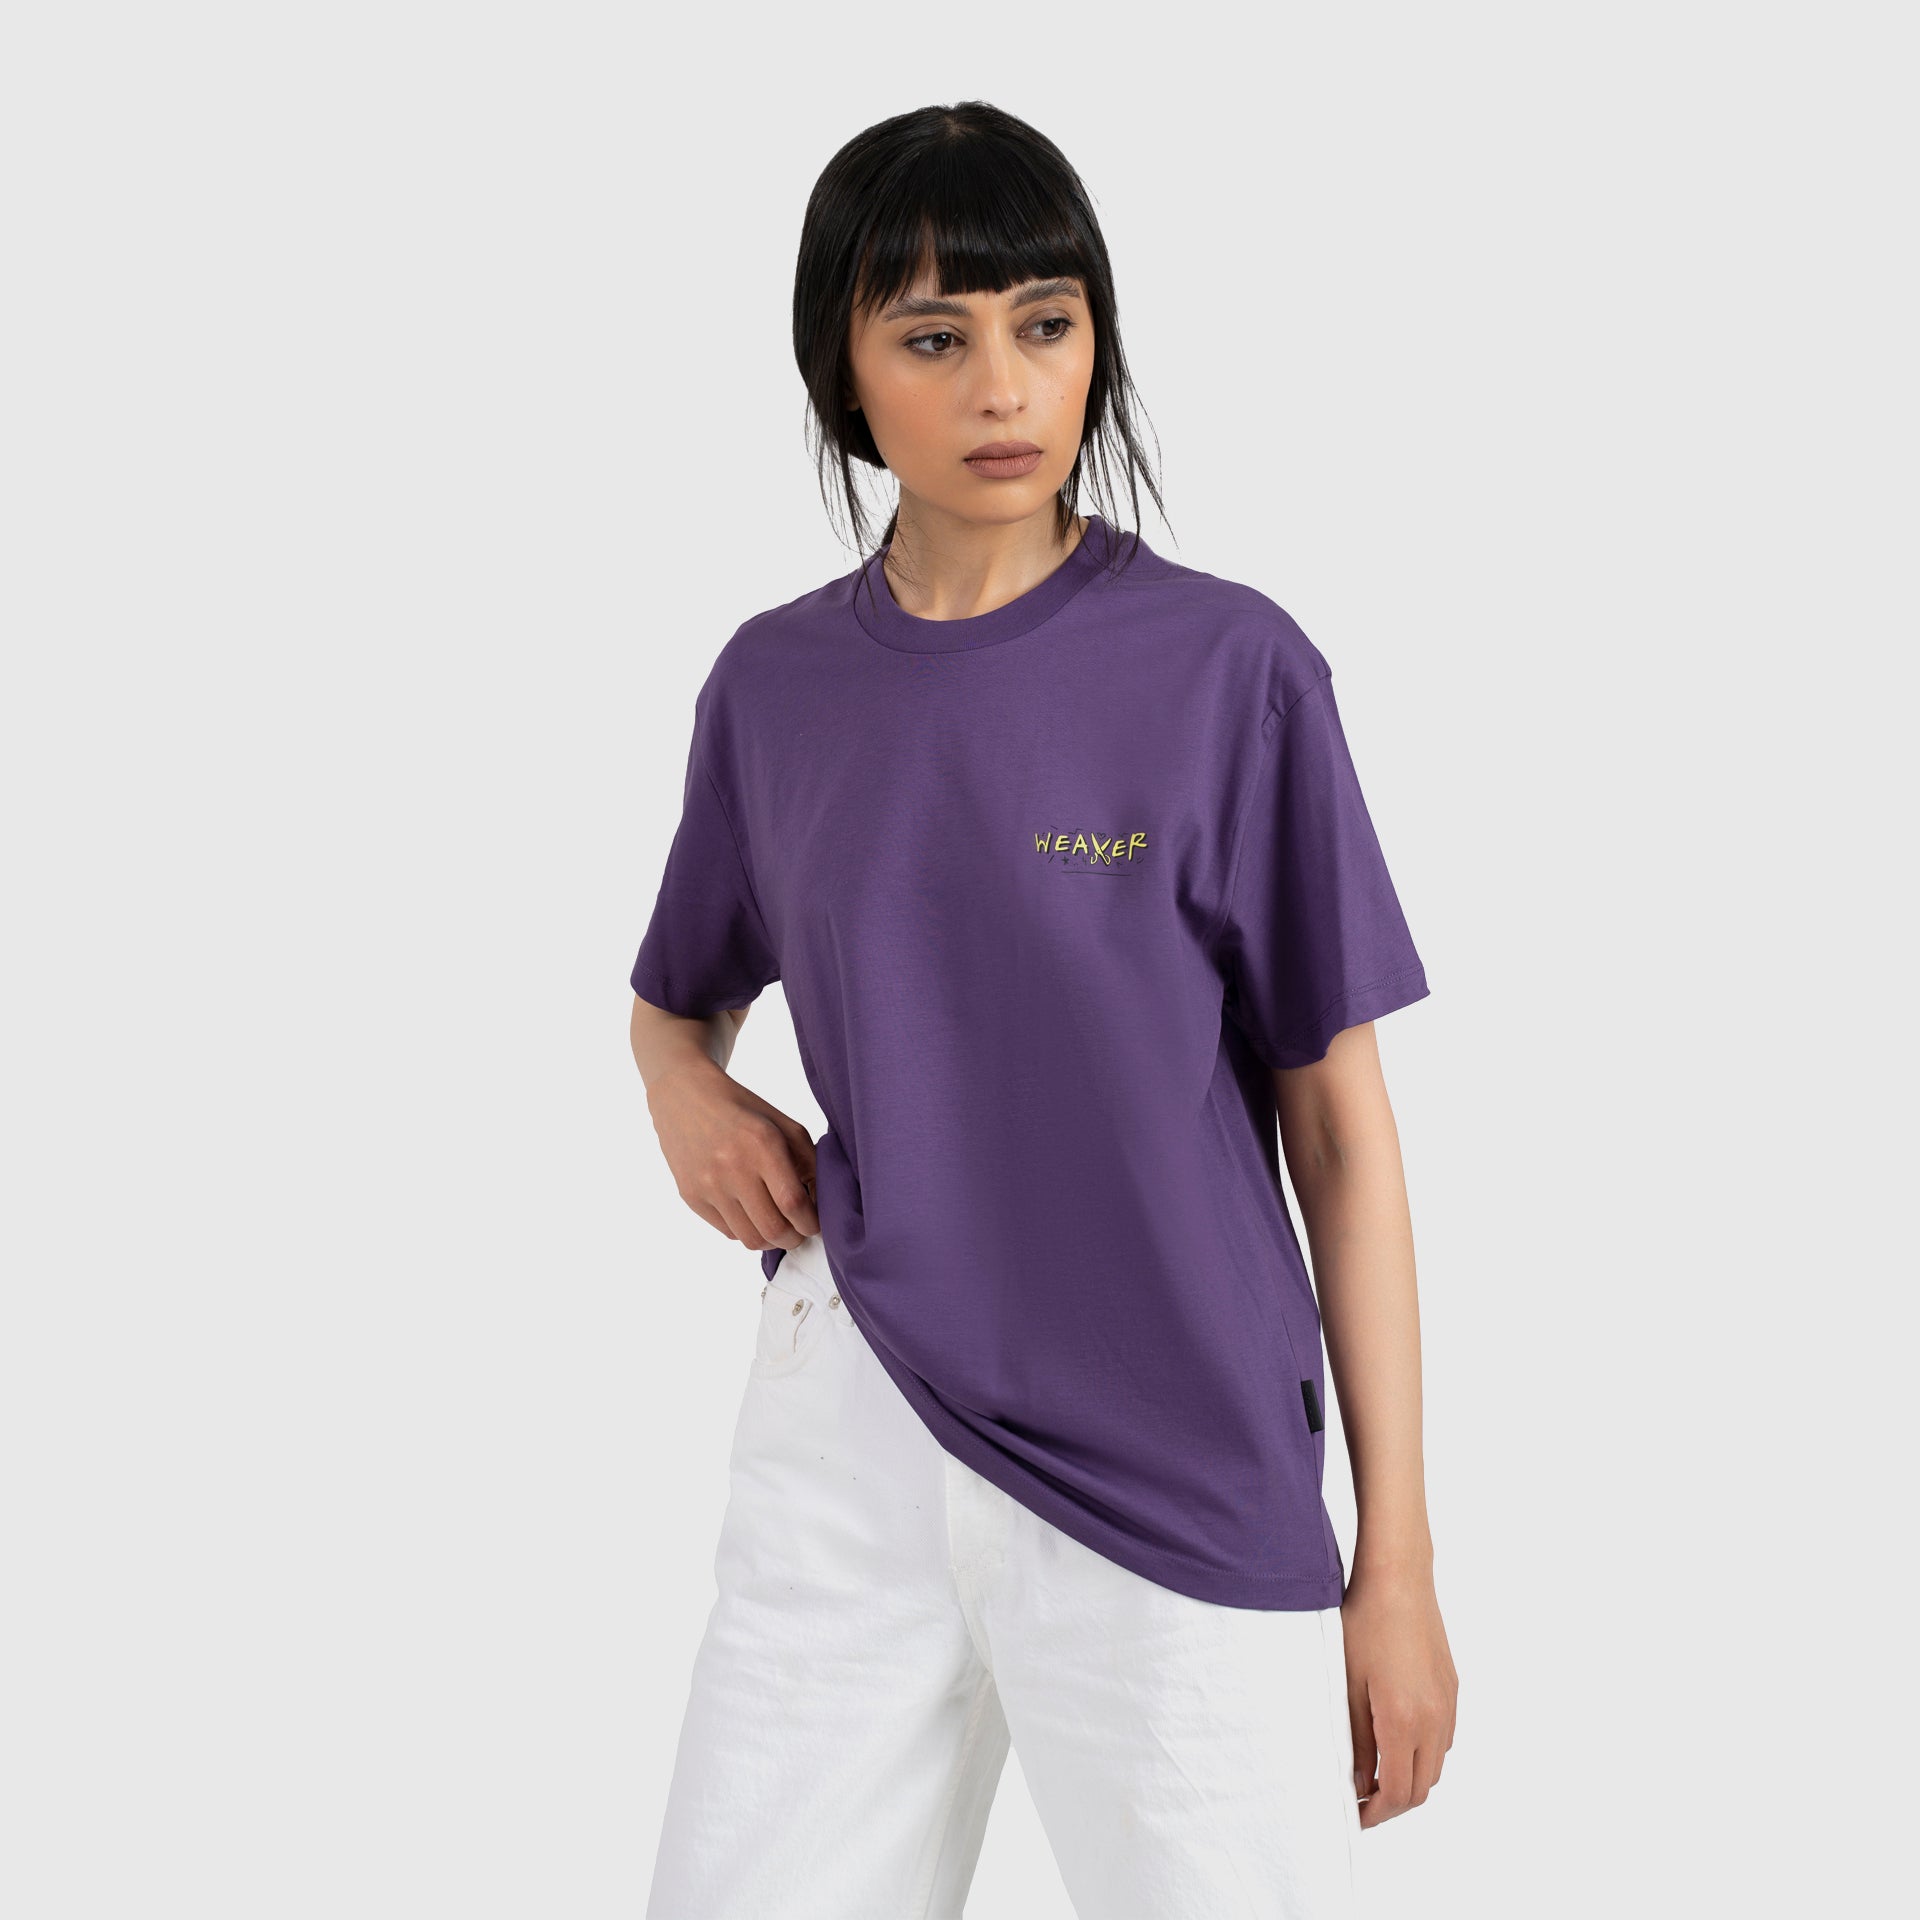 Purple Classic T-Shirt From Weaver Design